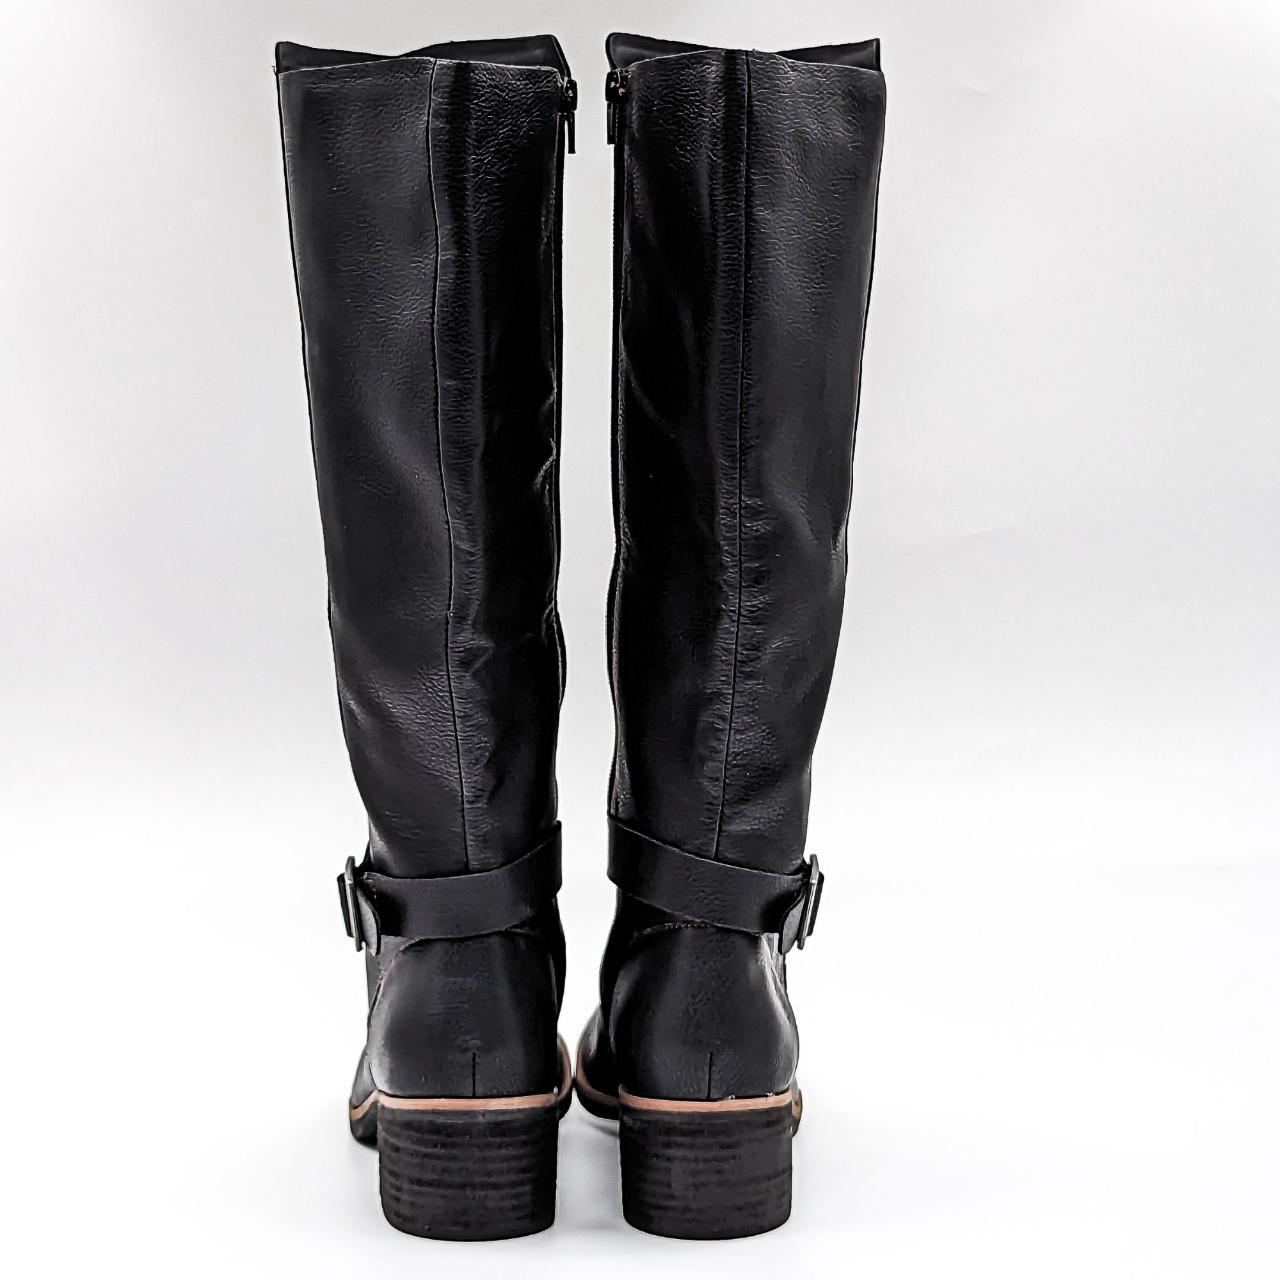 Korks Women's Black Boots (8)